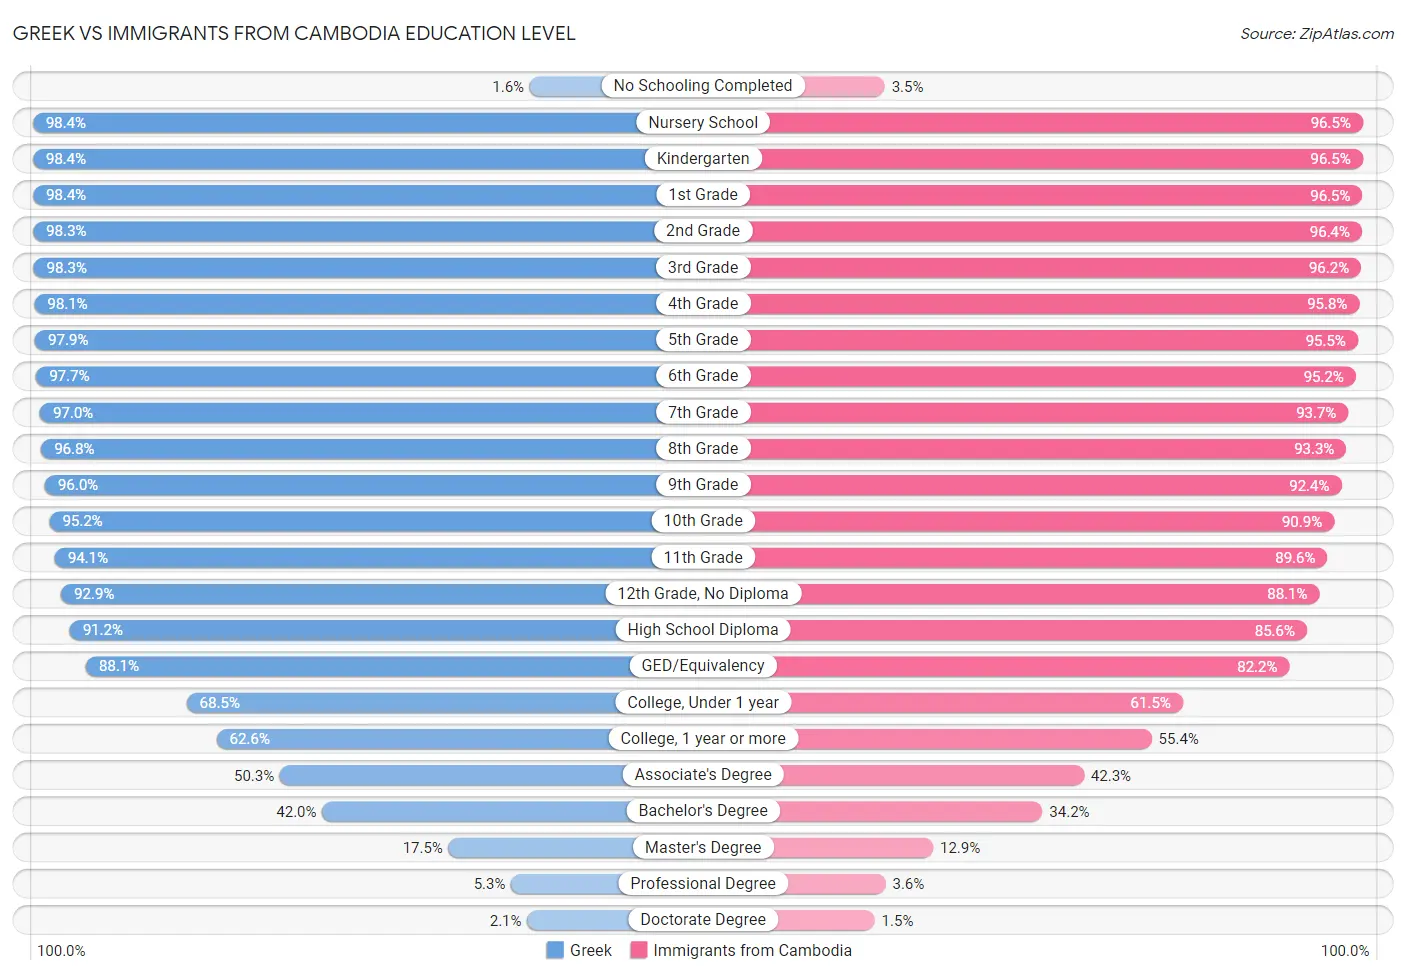 Greek vs Immigrants from Cambodia Education Level